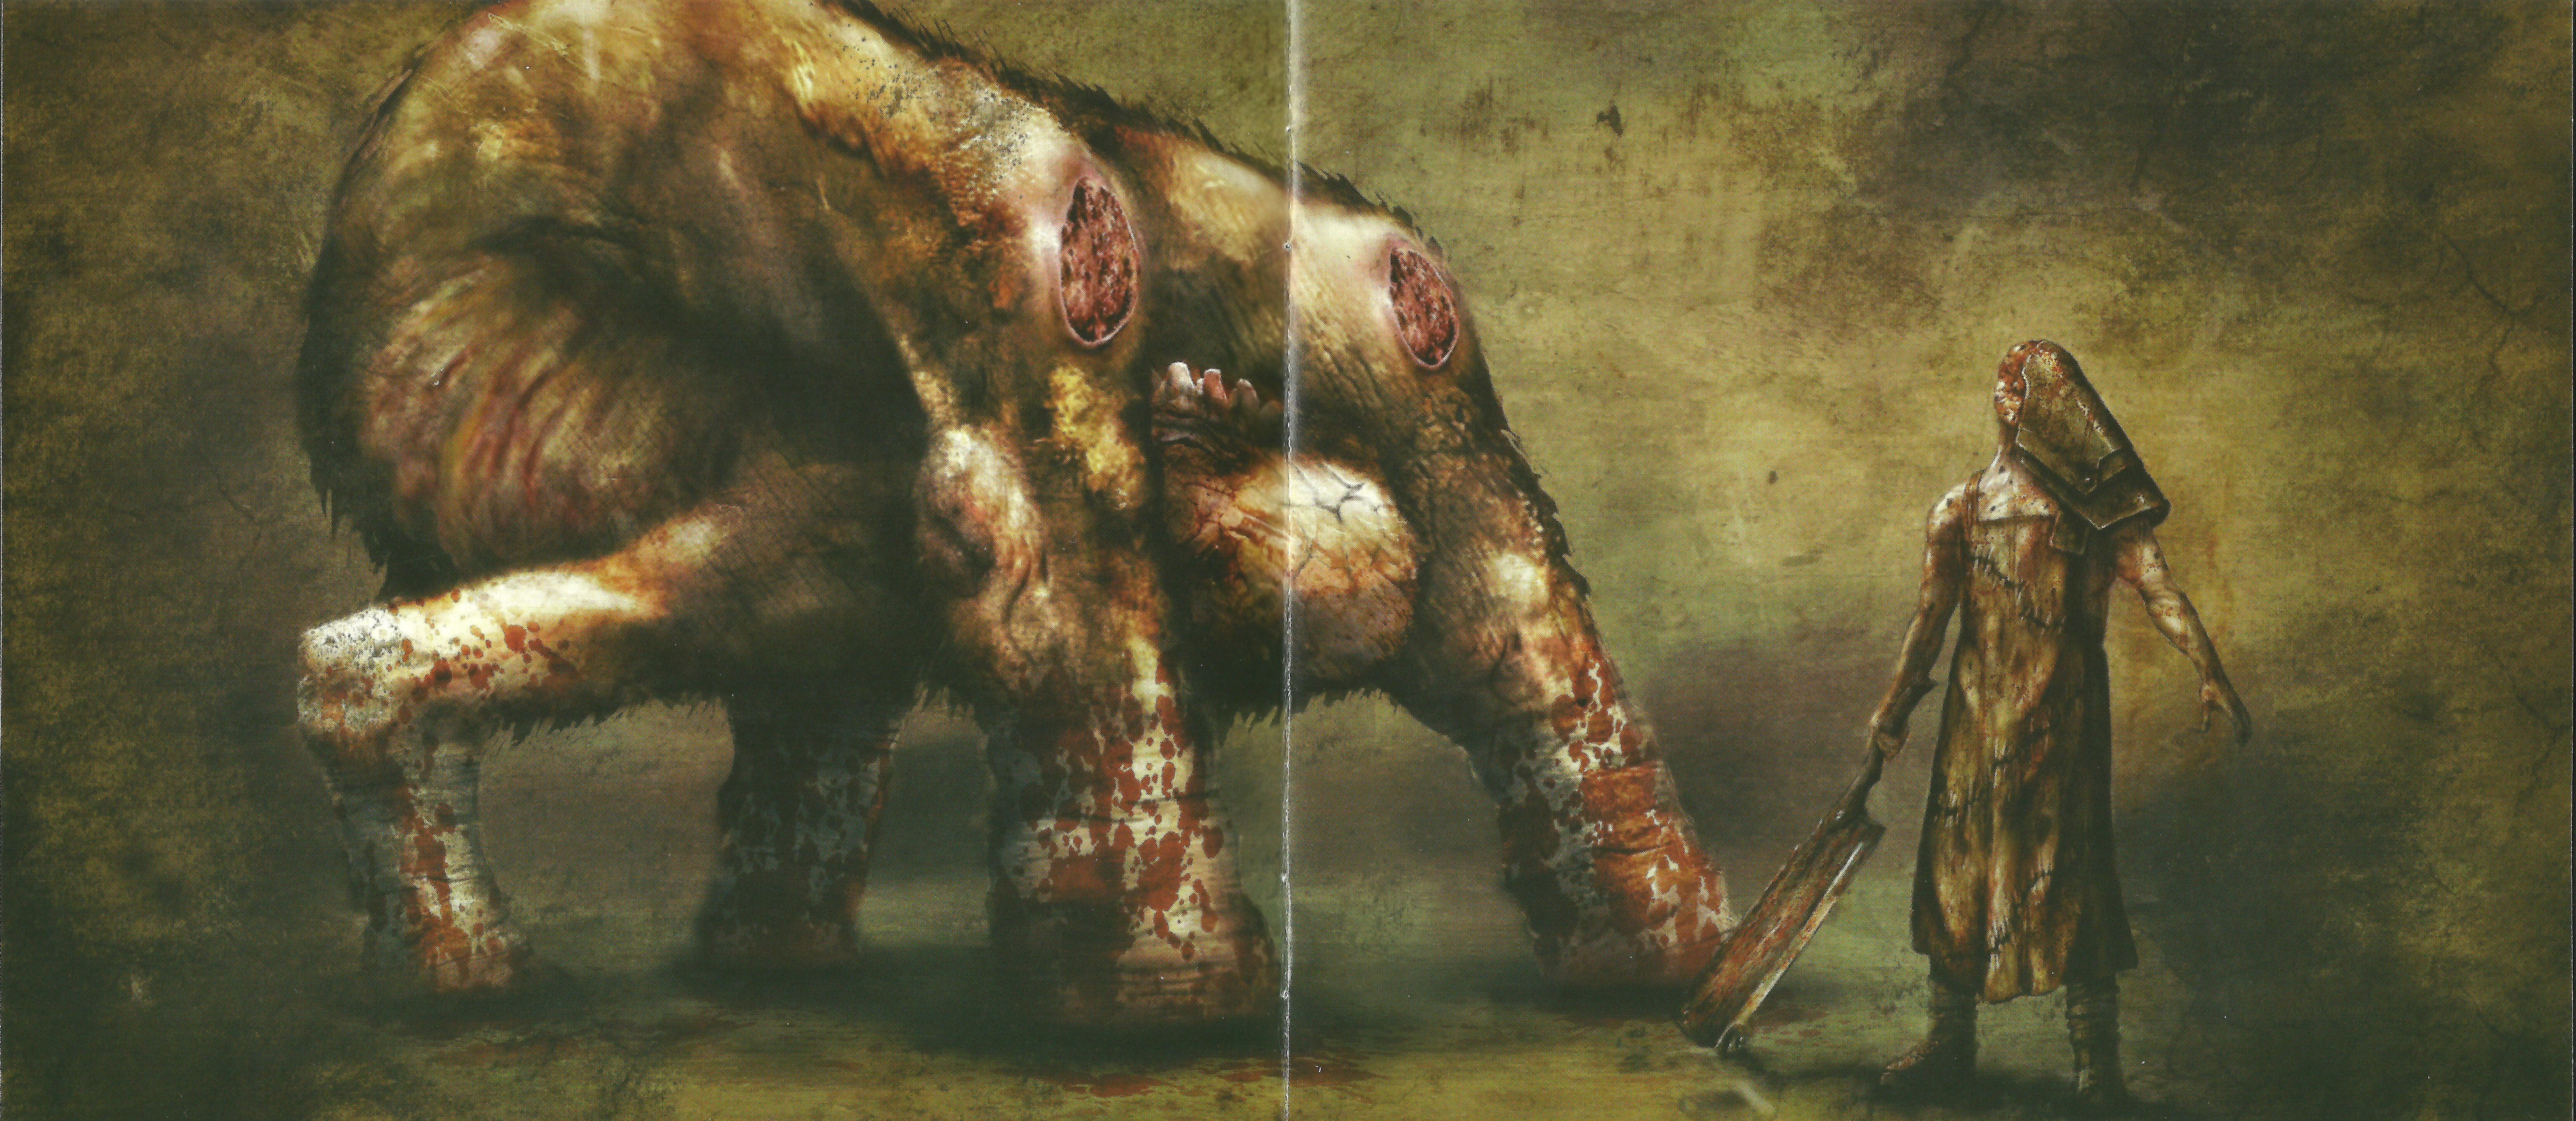 Silent Hill 4k Ultra HD Wallpaper | Background Image ...